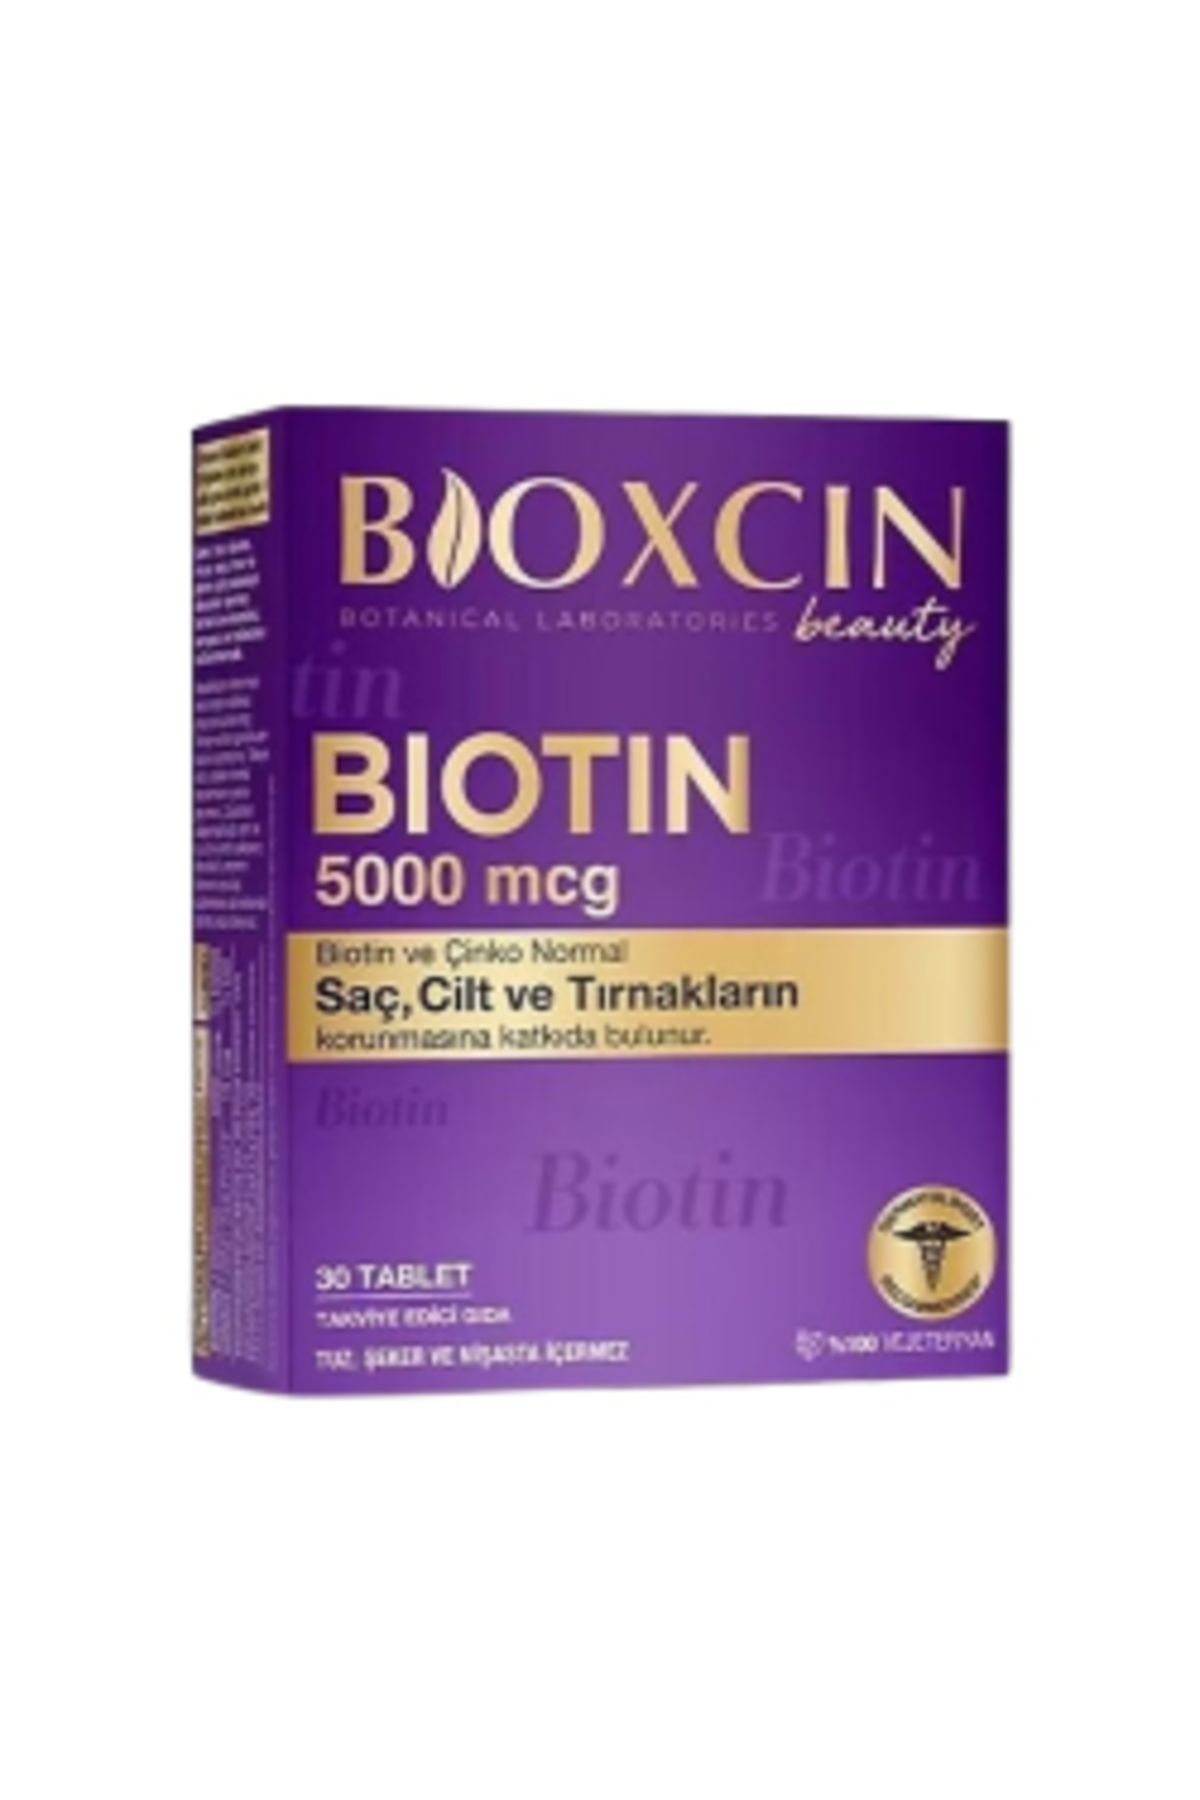 Bioxcin Biotin 5000 mcg 30 Tablet ( 1 ADET )